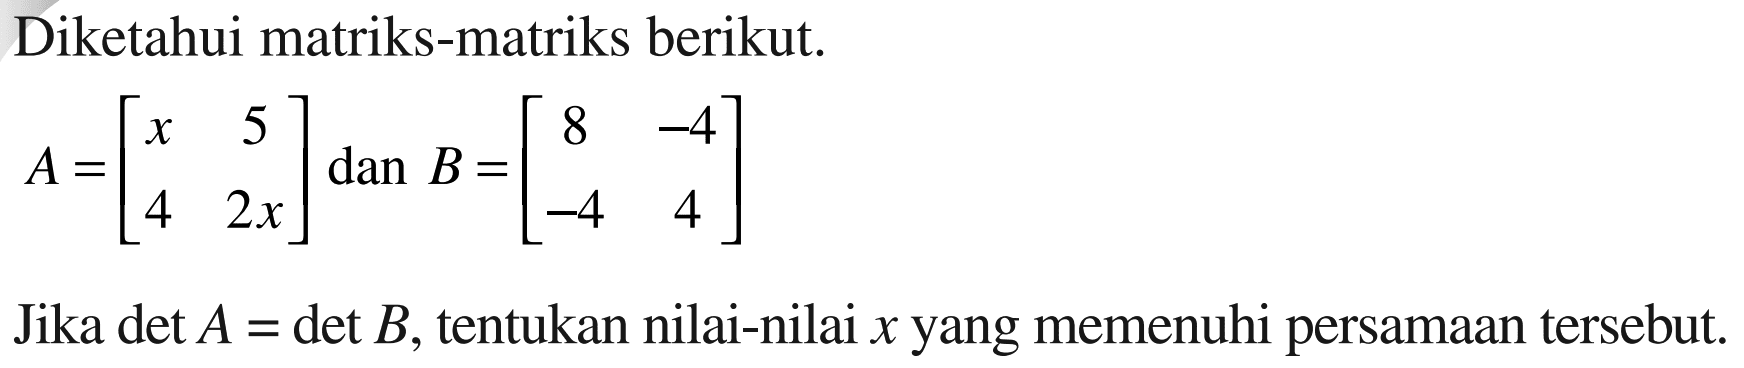 Diketahui matriks-matriks berikut. A=[x 5 4 2x] dan B=[8 -4 -4 4] Jika det A=det B, tentukan nilai-nilai x yang memenuhi persamaan tersebut.